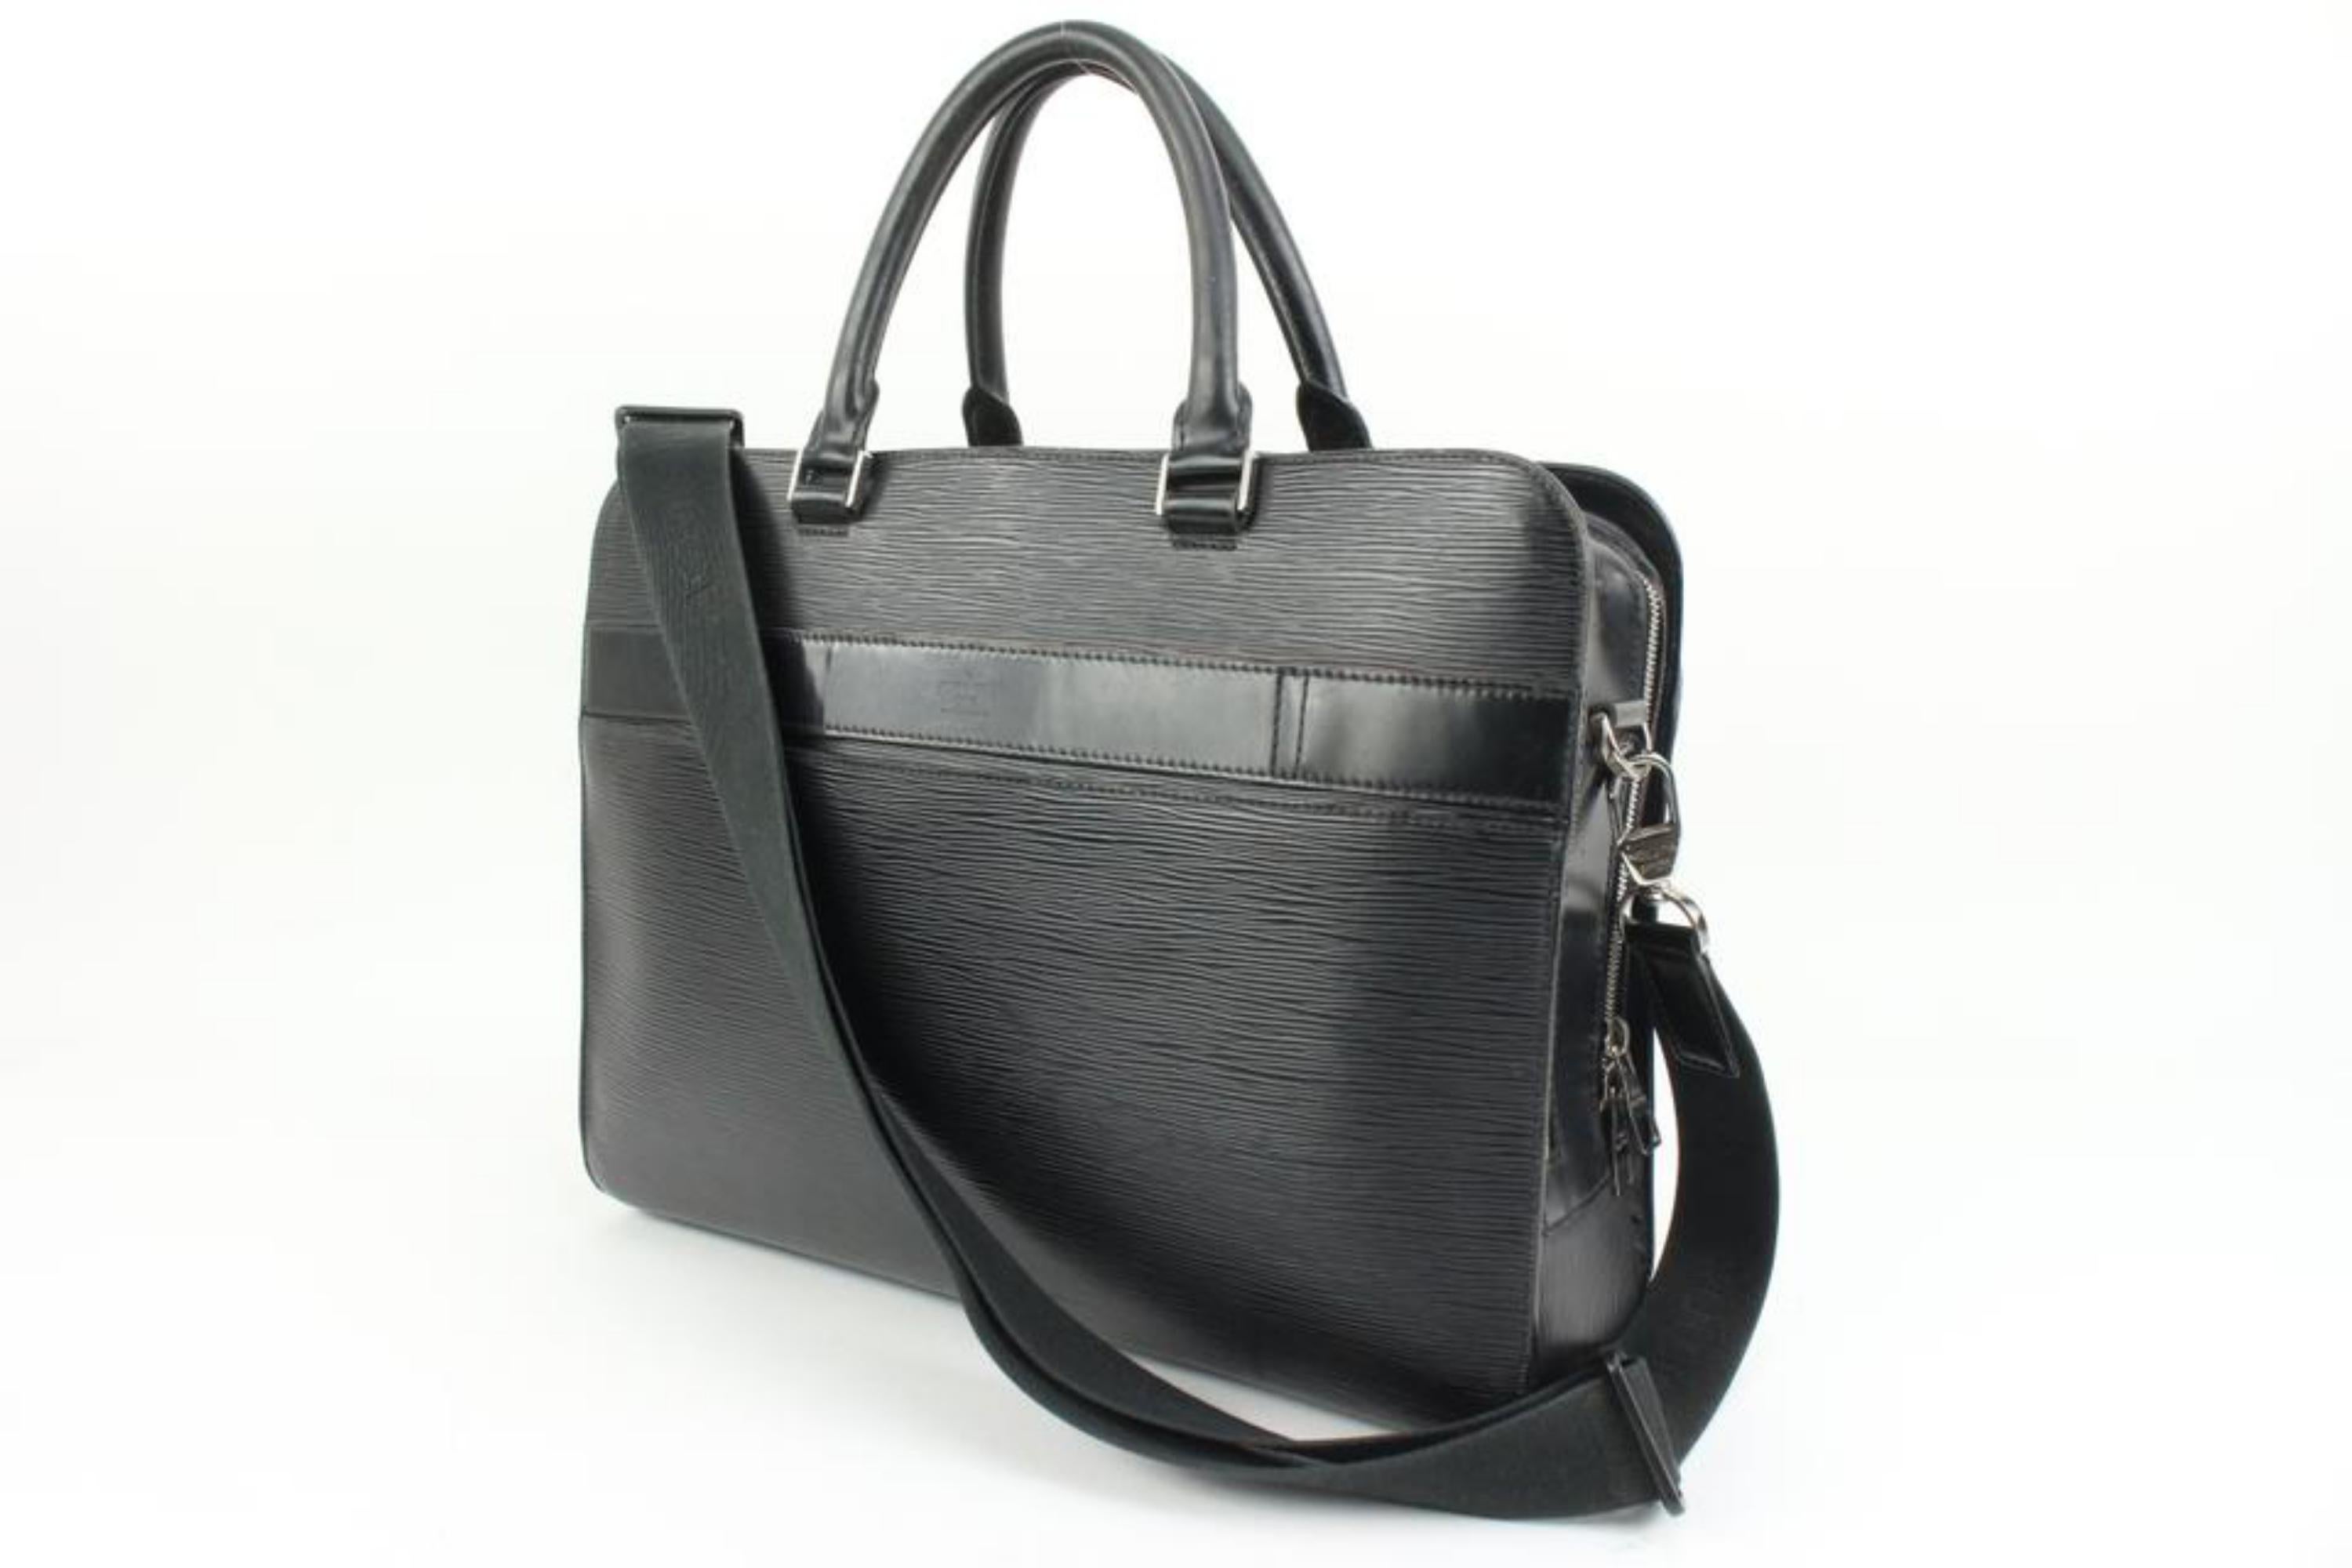 Louis Vuitton Black Epi Leather Noir Basano Messenger 2way Attache 45lk15
Date Code/Serial Number: TR4191
Made In: France
Measurements: Length:  15